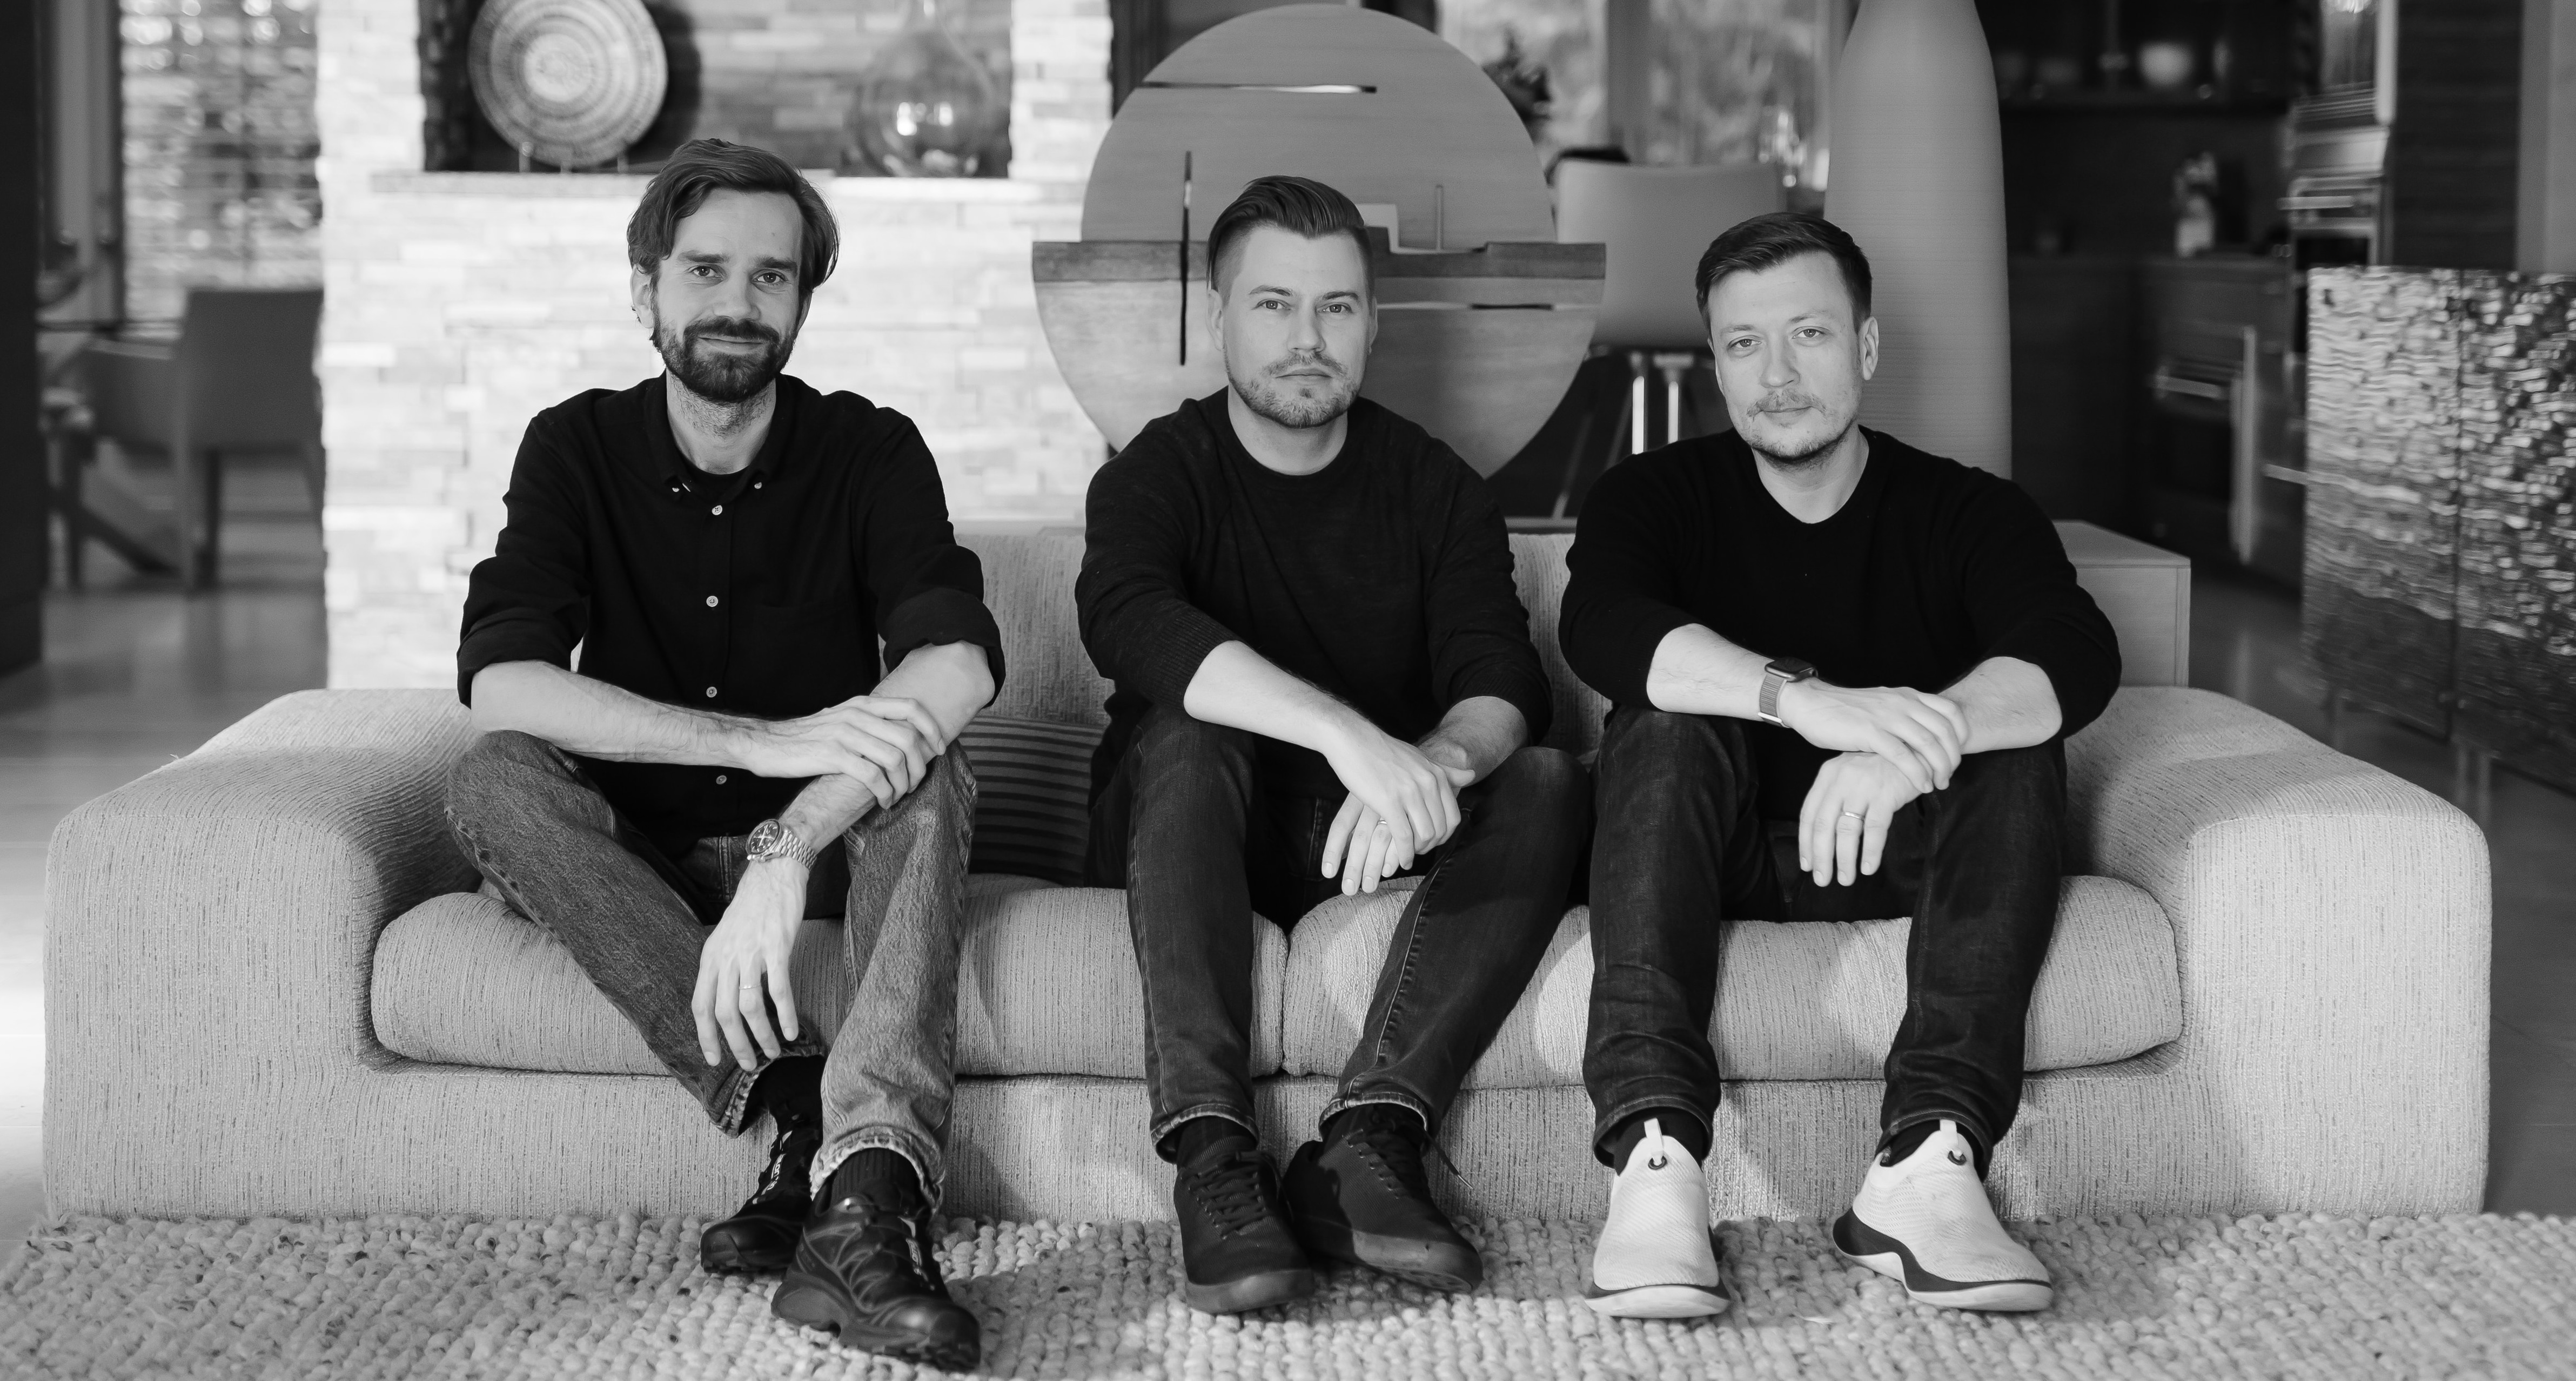 The three Linear co-cofounders (Jori Lallo, Karri Saarinen, Tuomas Artman) sitting on a couch.